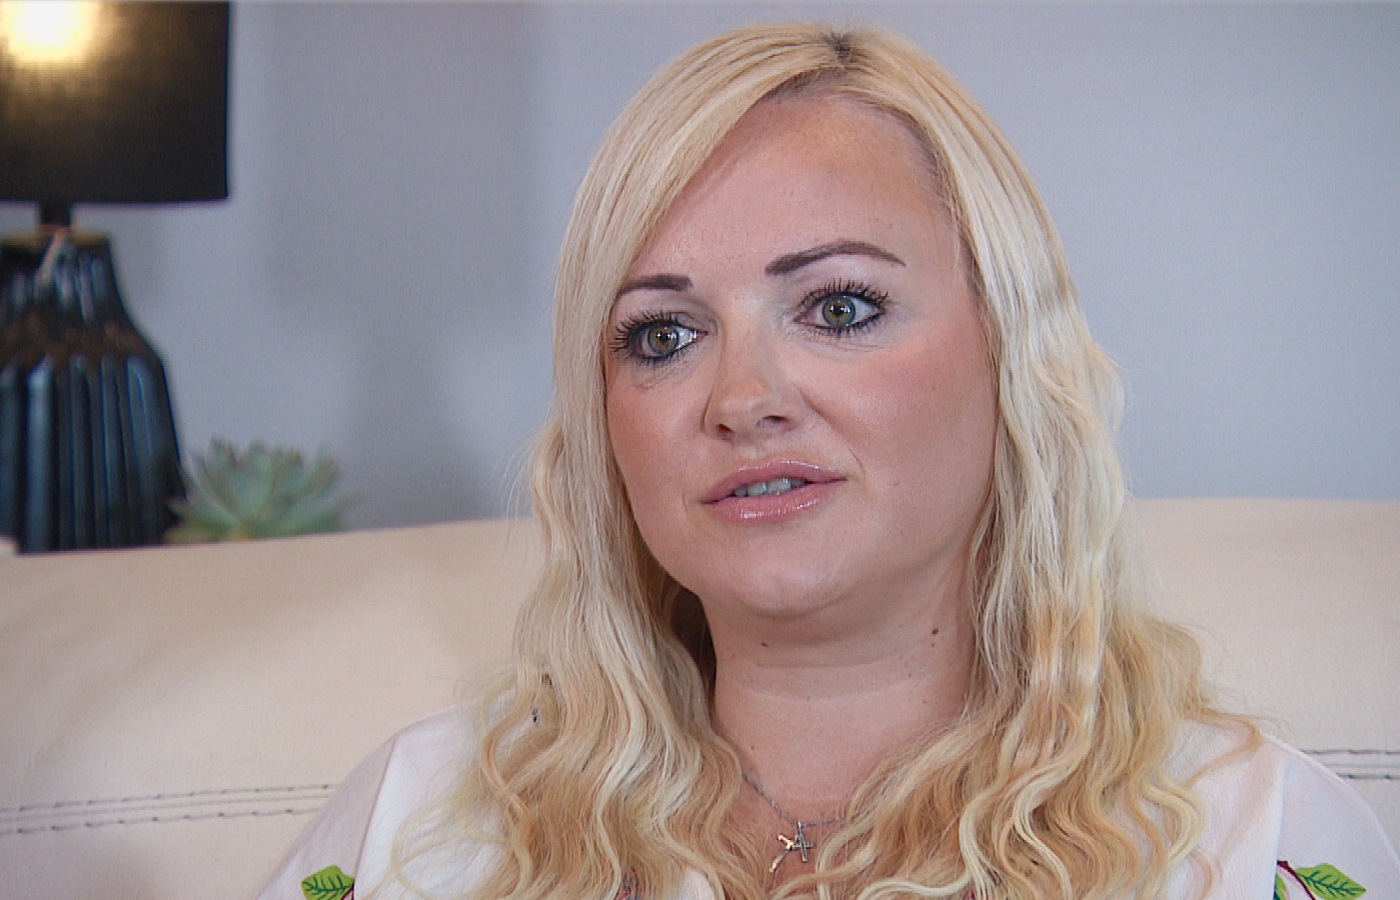 Eva Gillespie's aunt, Nicola Cunningham, offered to donate her kidney.